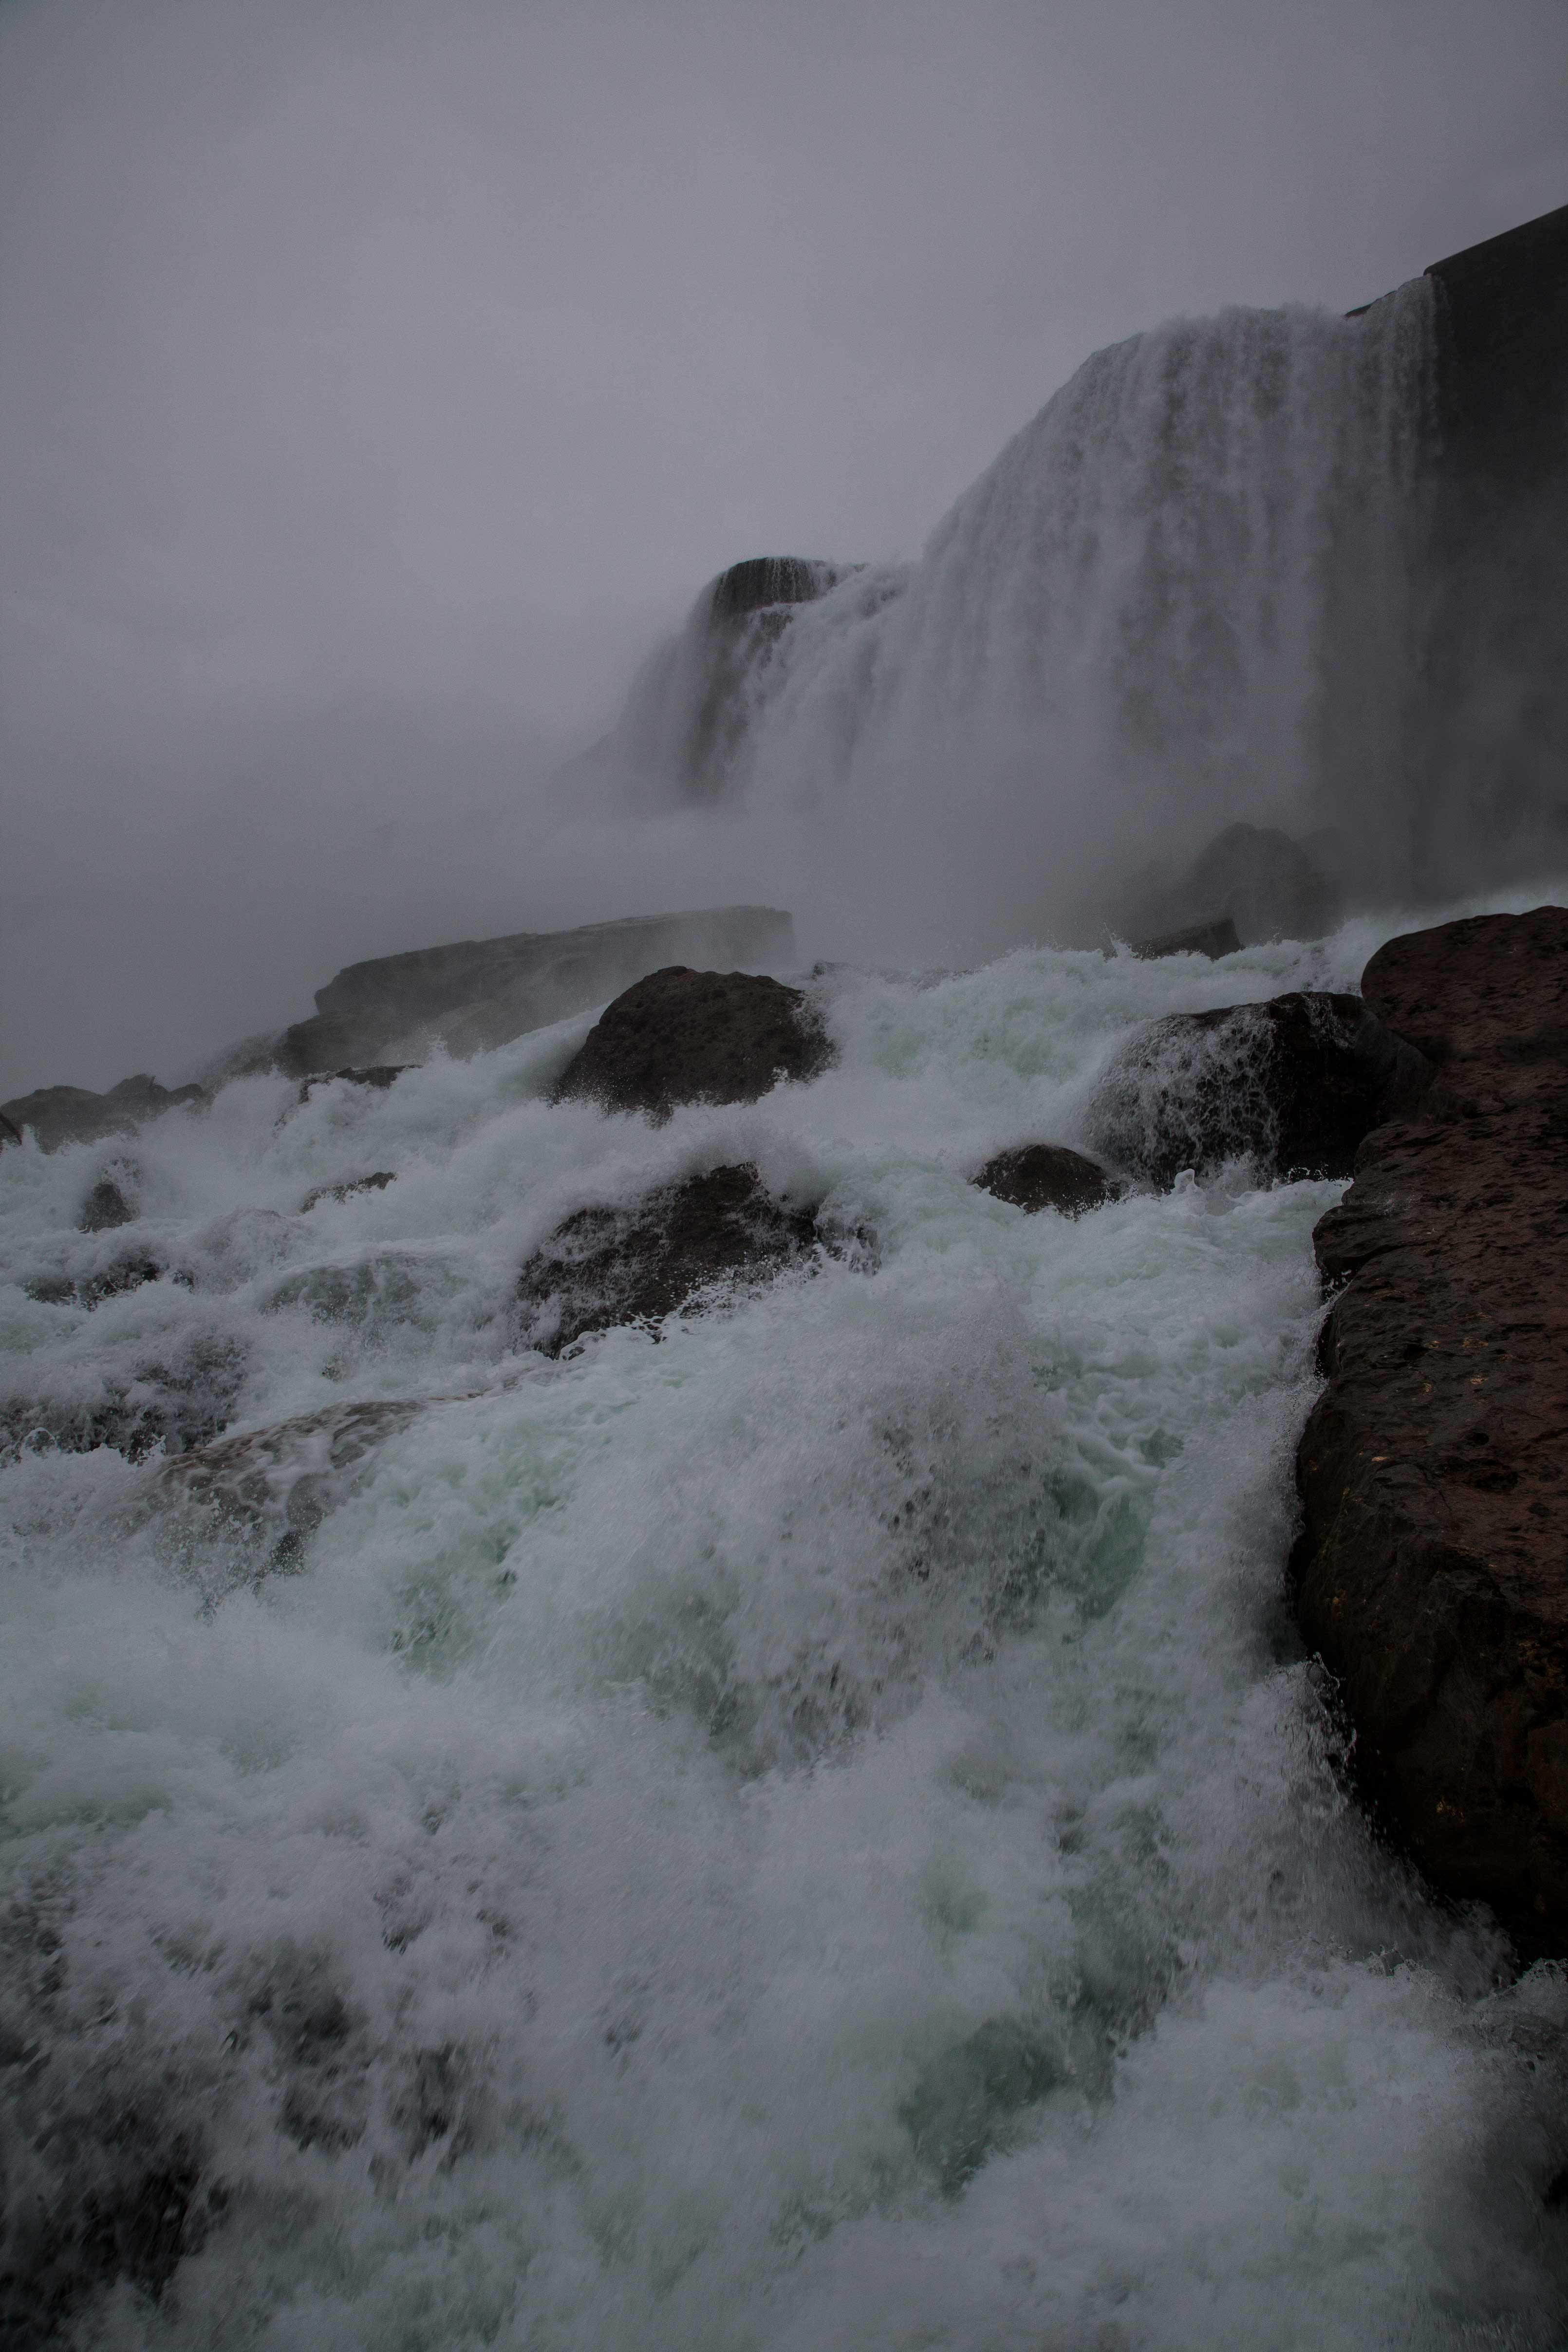 Bridal Veil Falls from the American side of Niagara Falls